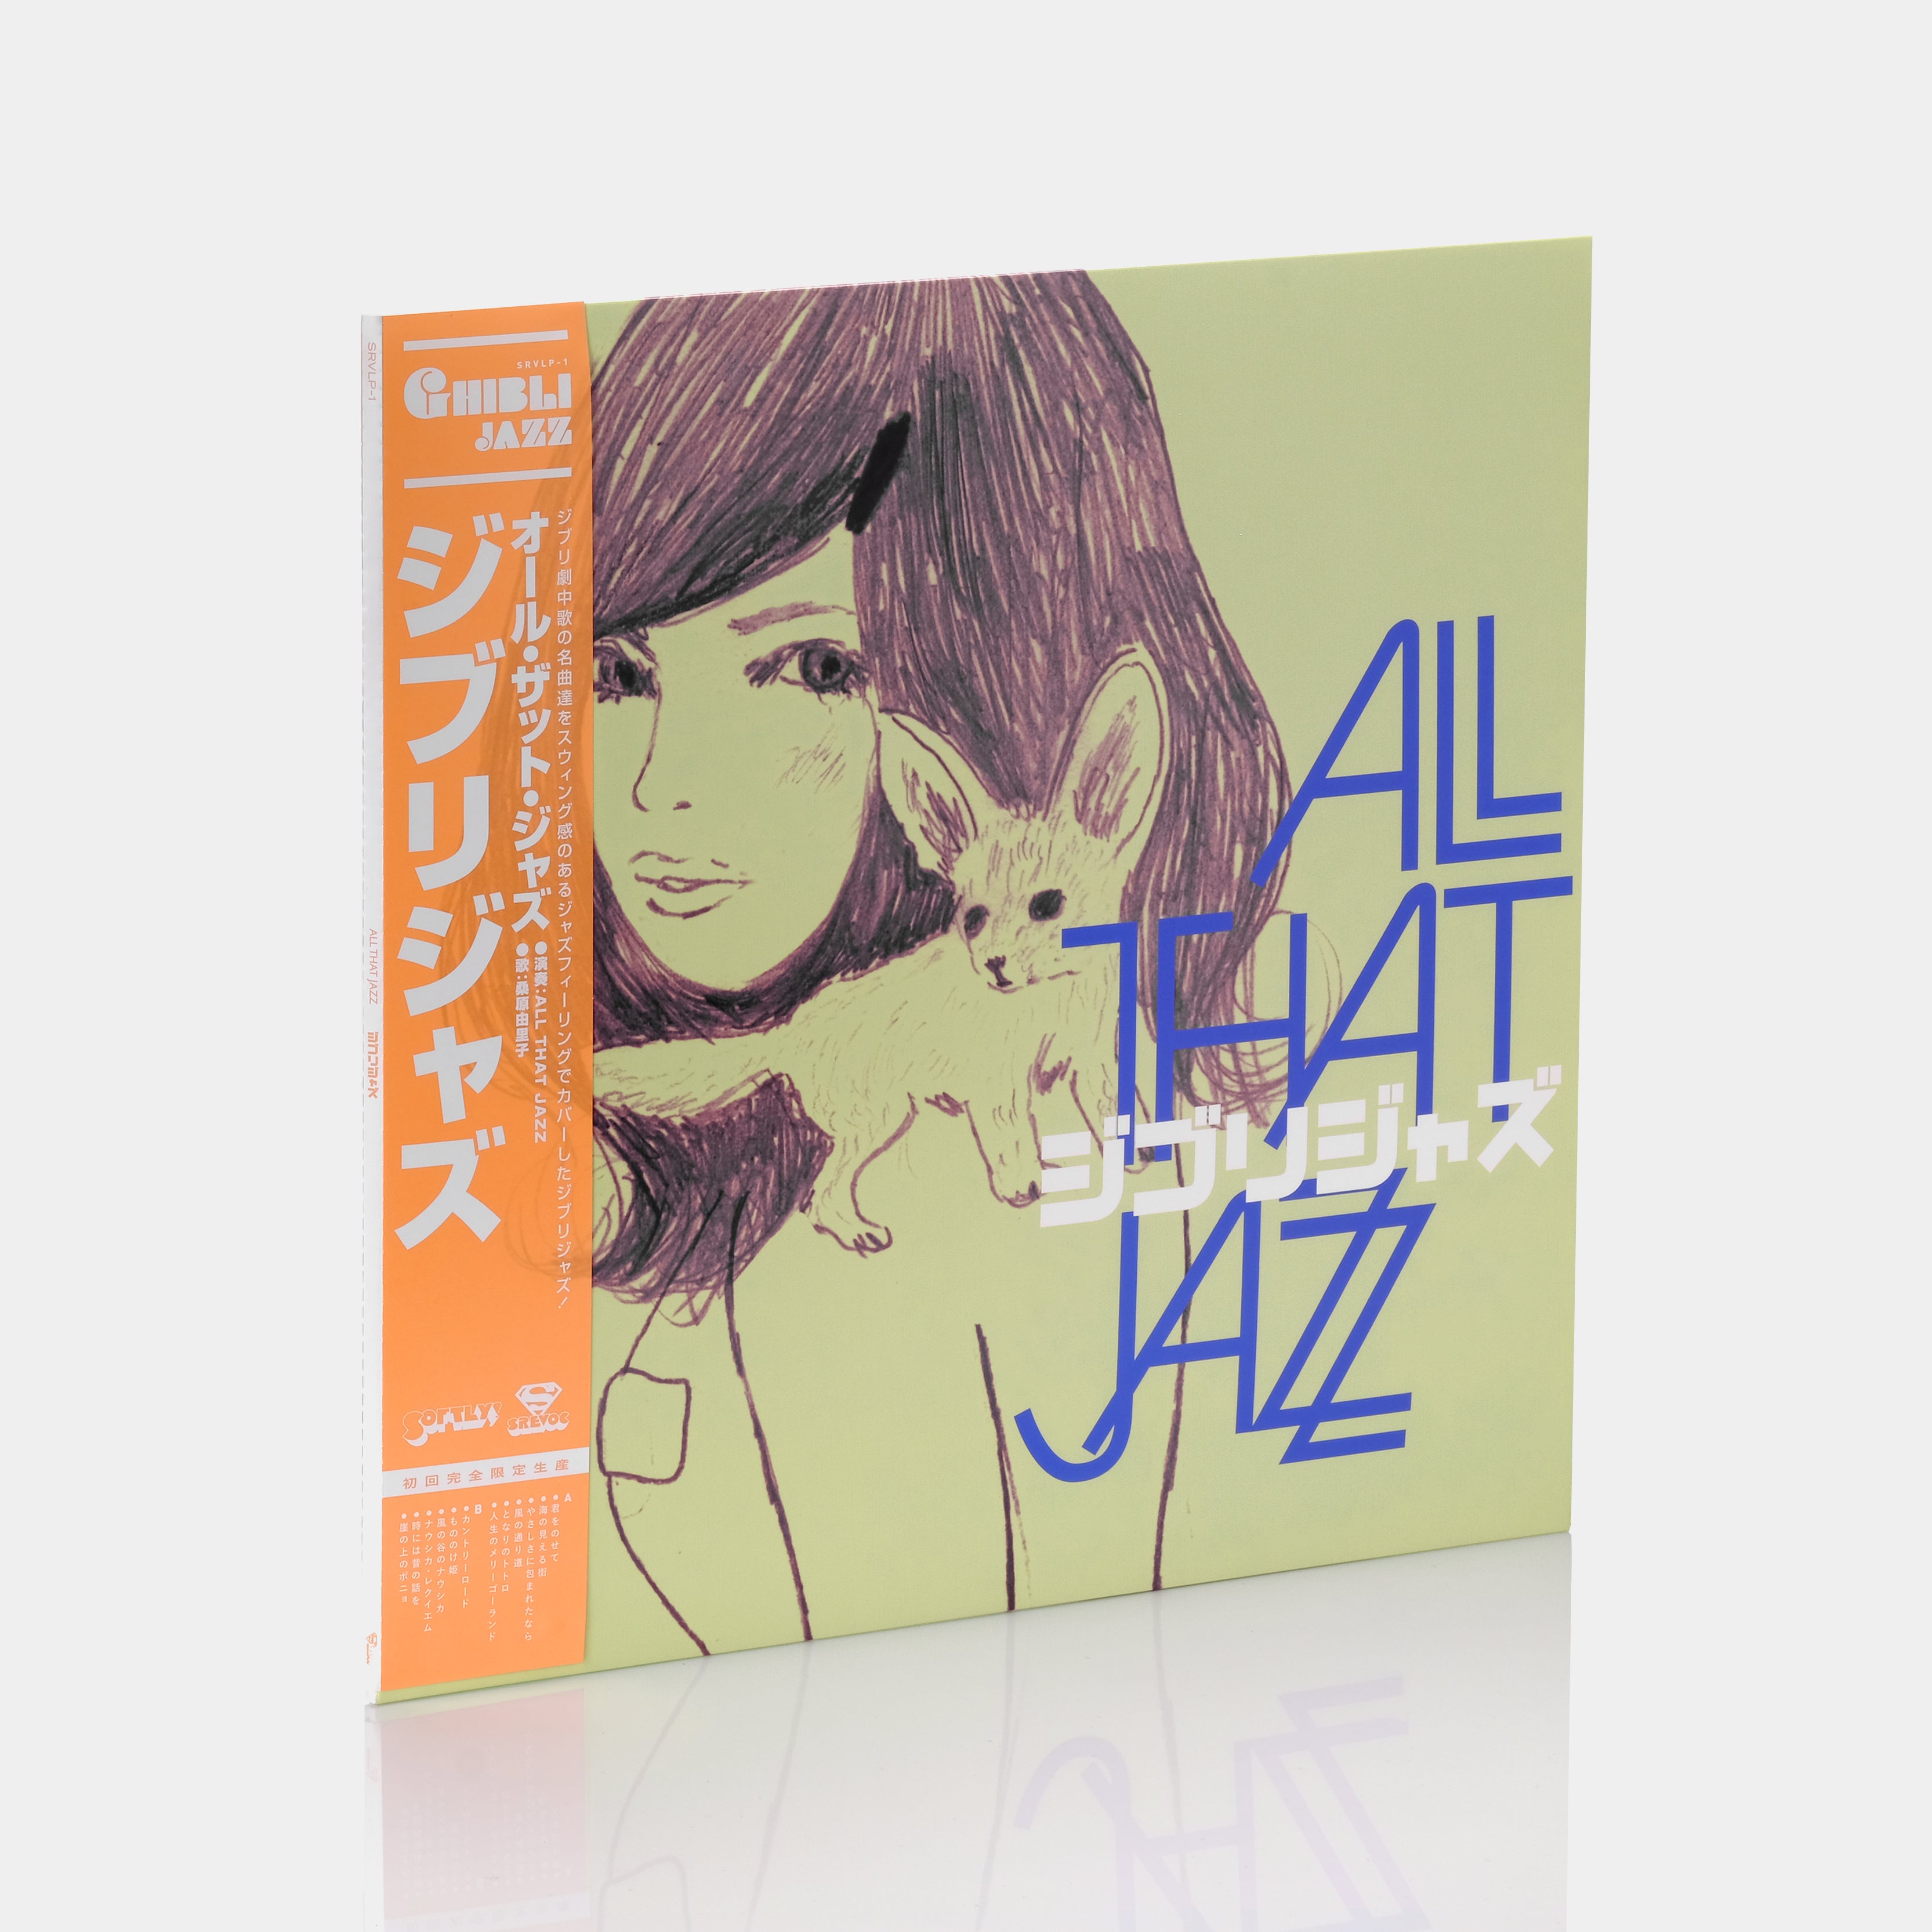 All That Jazz - ジブリジャズ (Ghibli Jazz) LP Vinyl Record